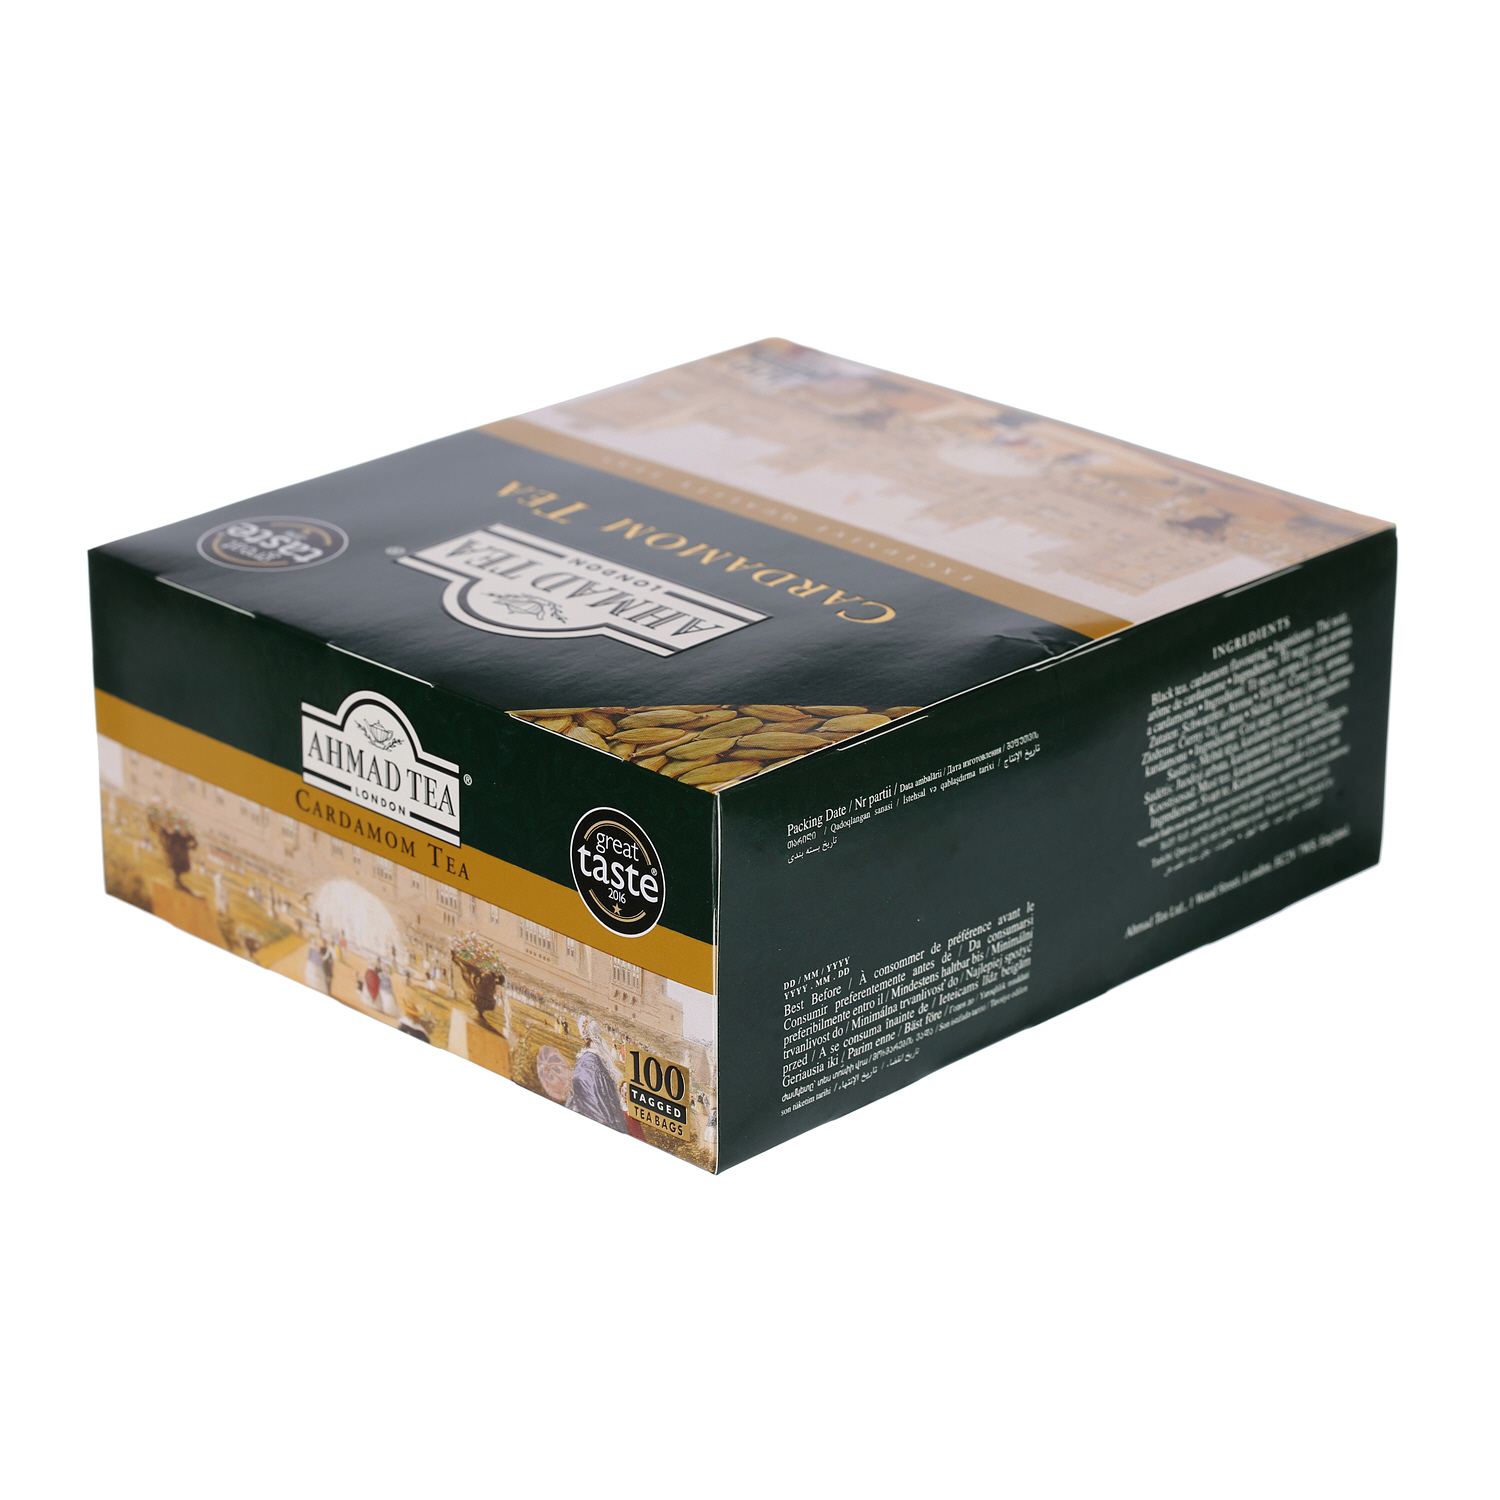 Ahmed Tea Bag Cardamom 2 g × 100 Pack